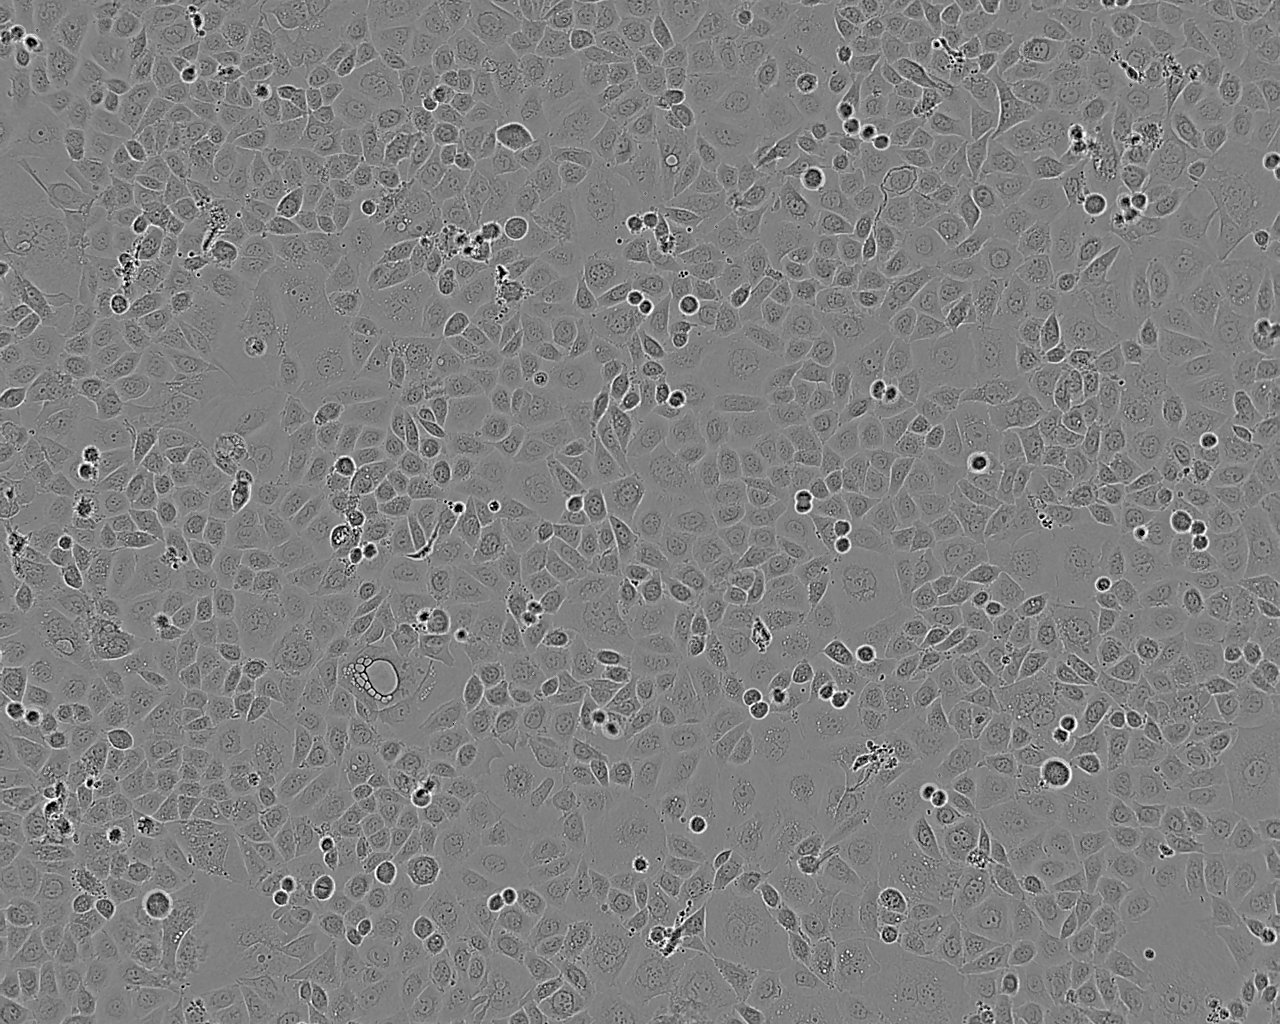 TM4 epithelioid cells小鼠睾丸细胞系